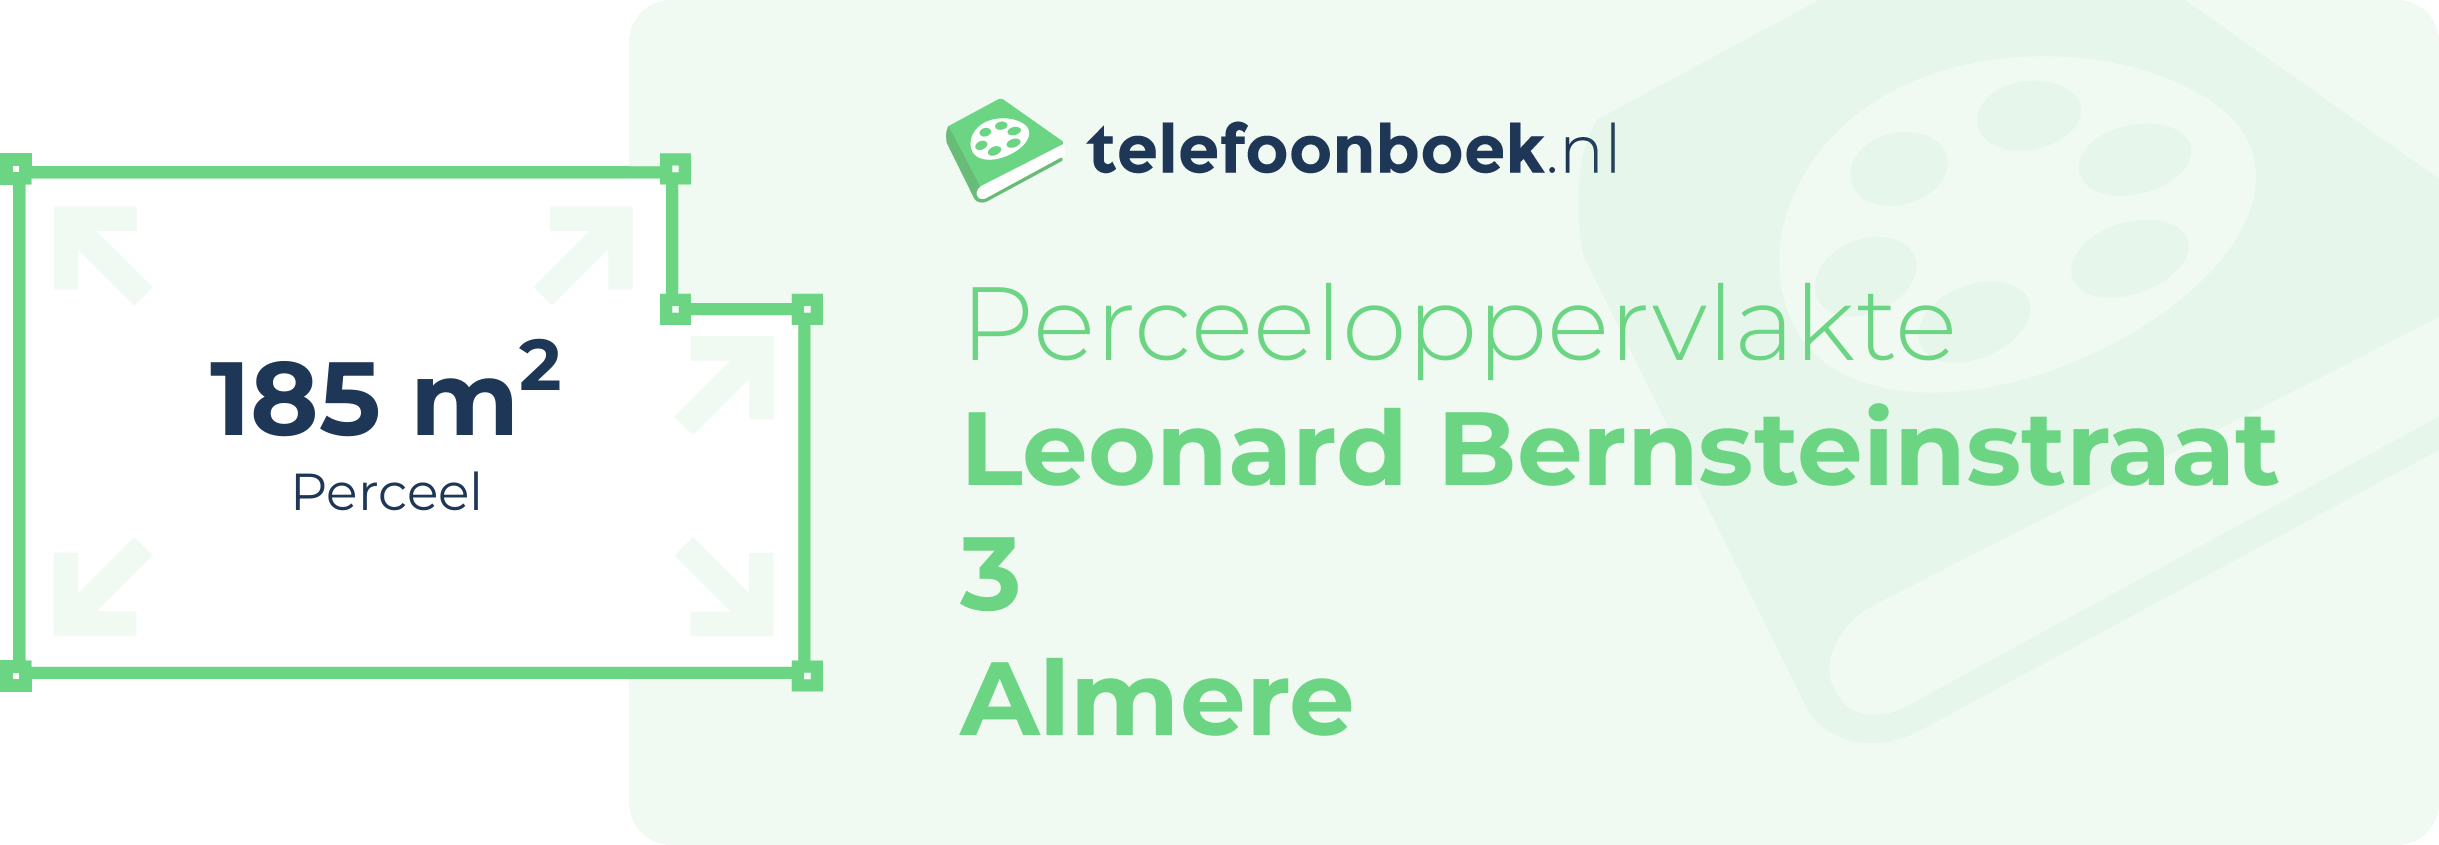 Perceeloppervlakte Leonard Bernsteinstraat 3 Almere